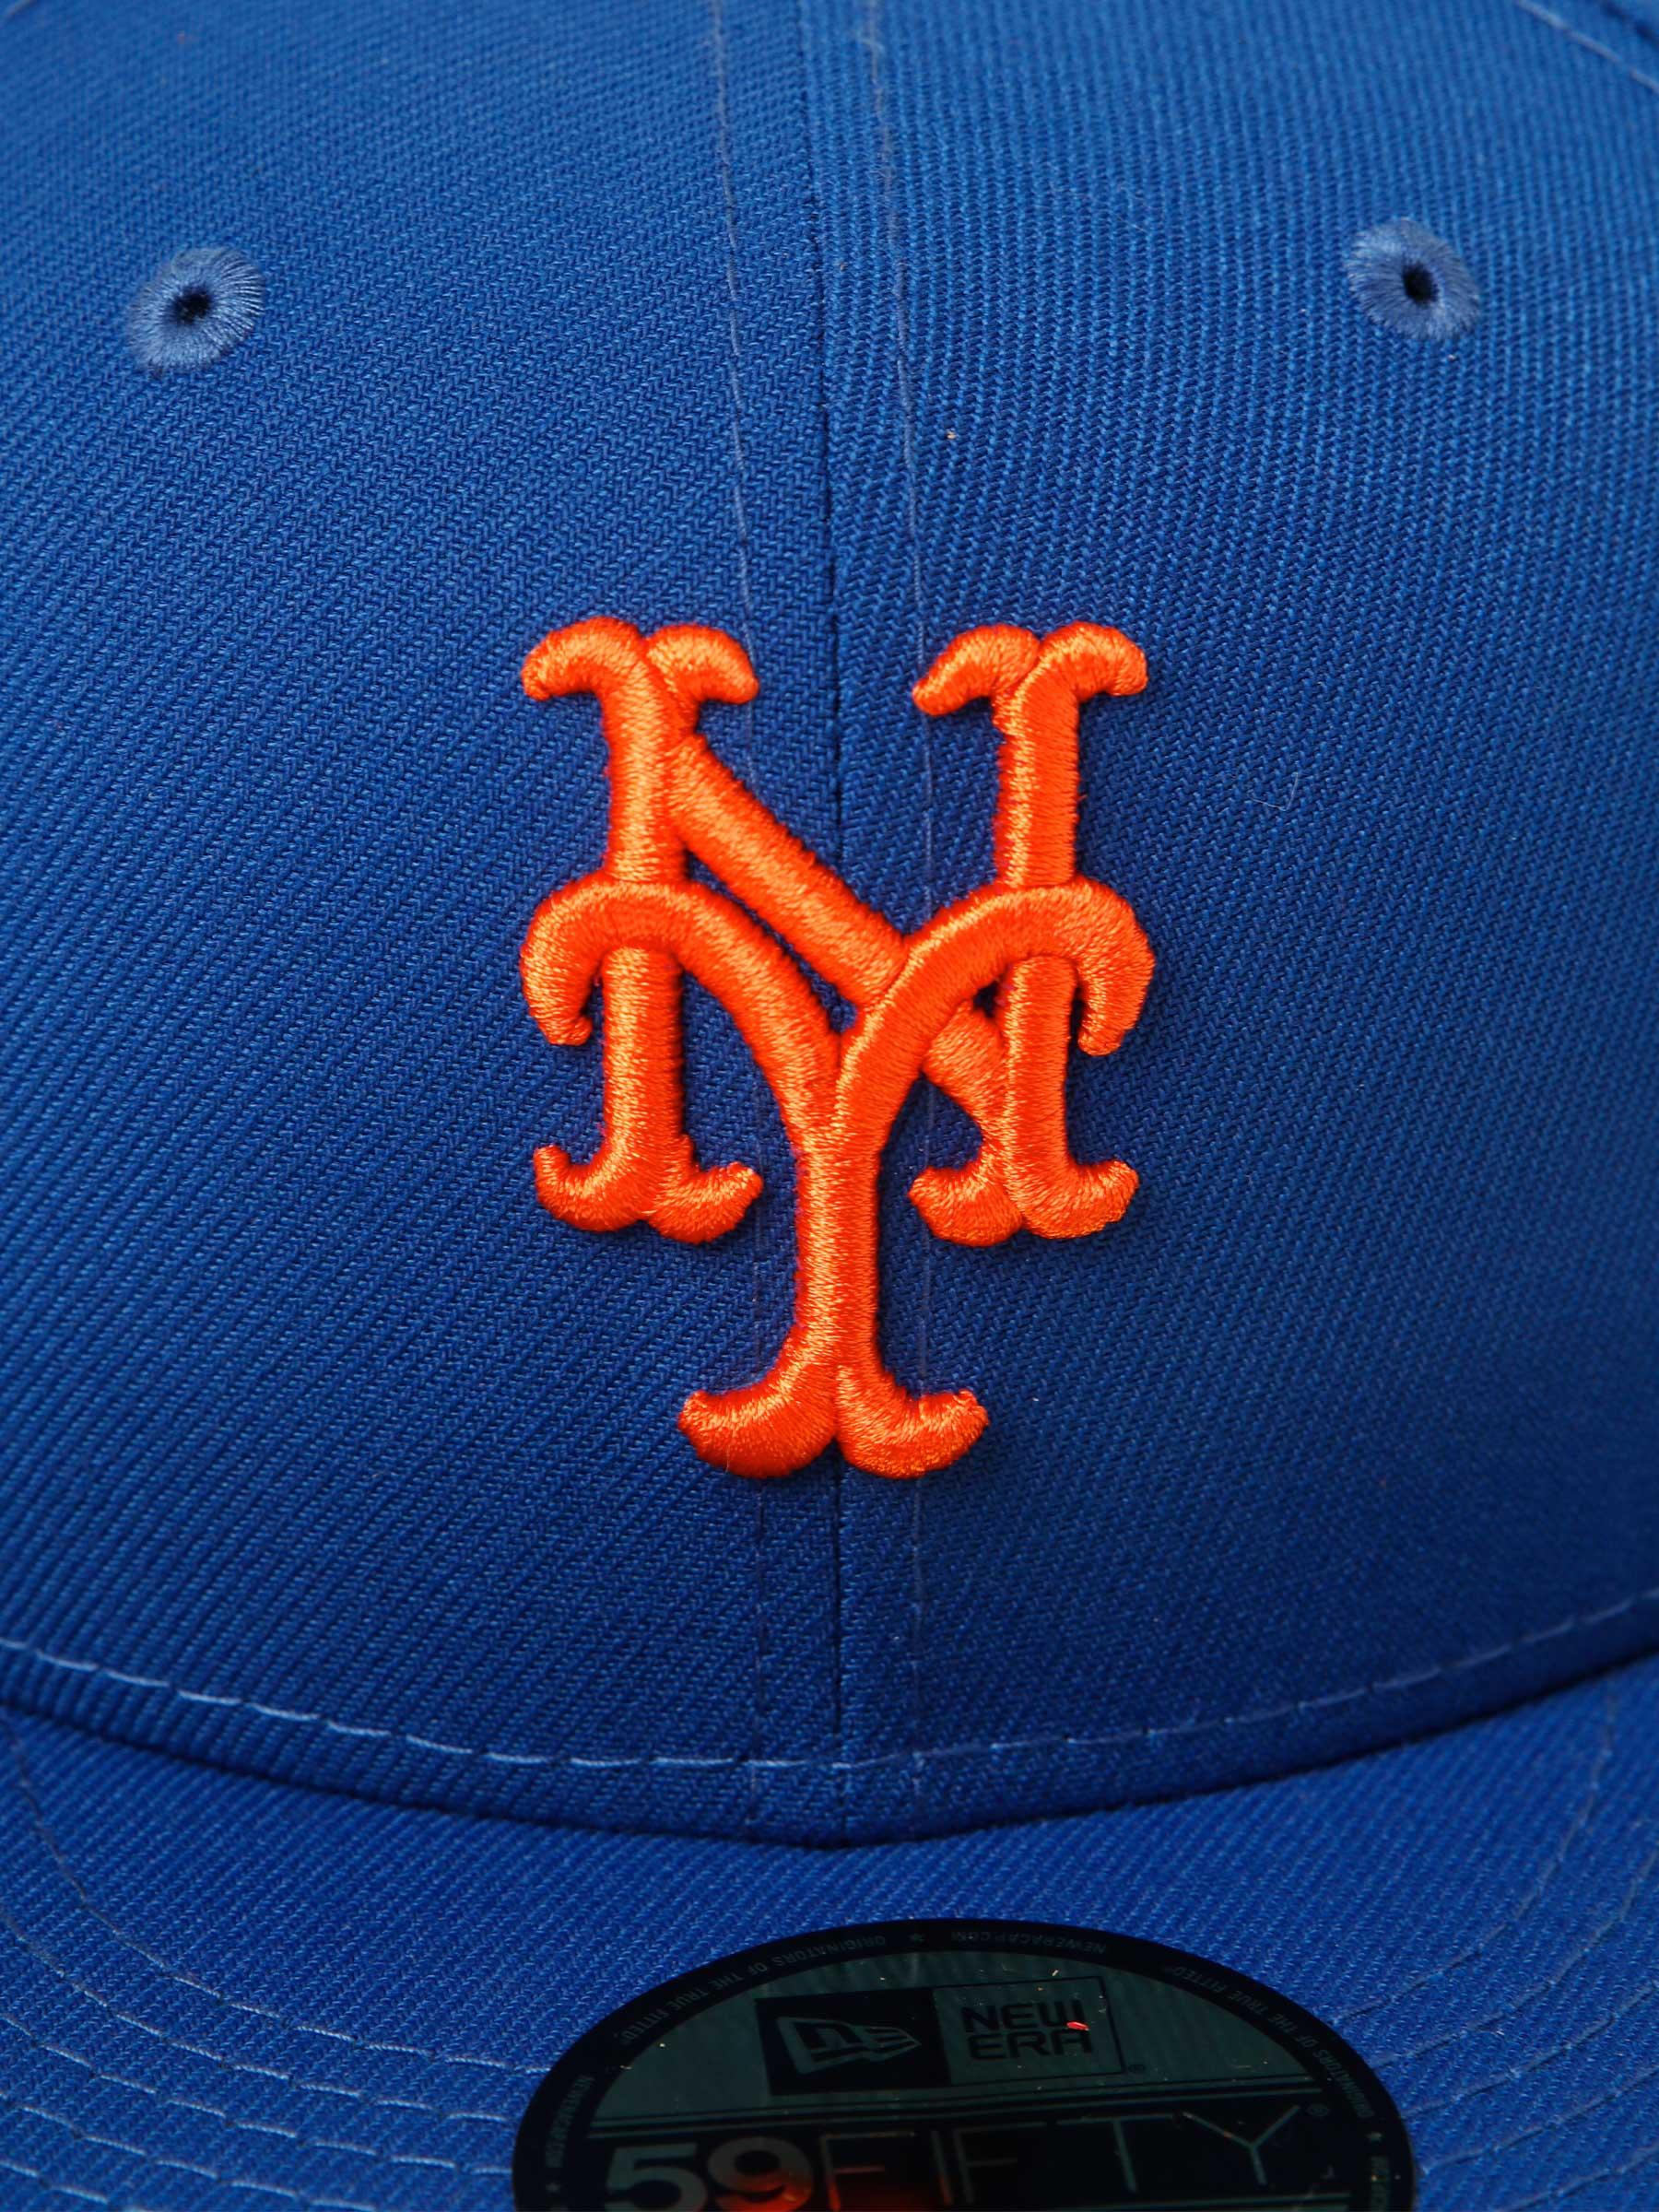 59Fifty New York Mets NE12572842